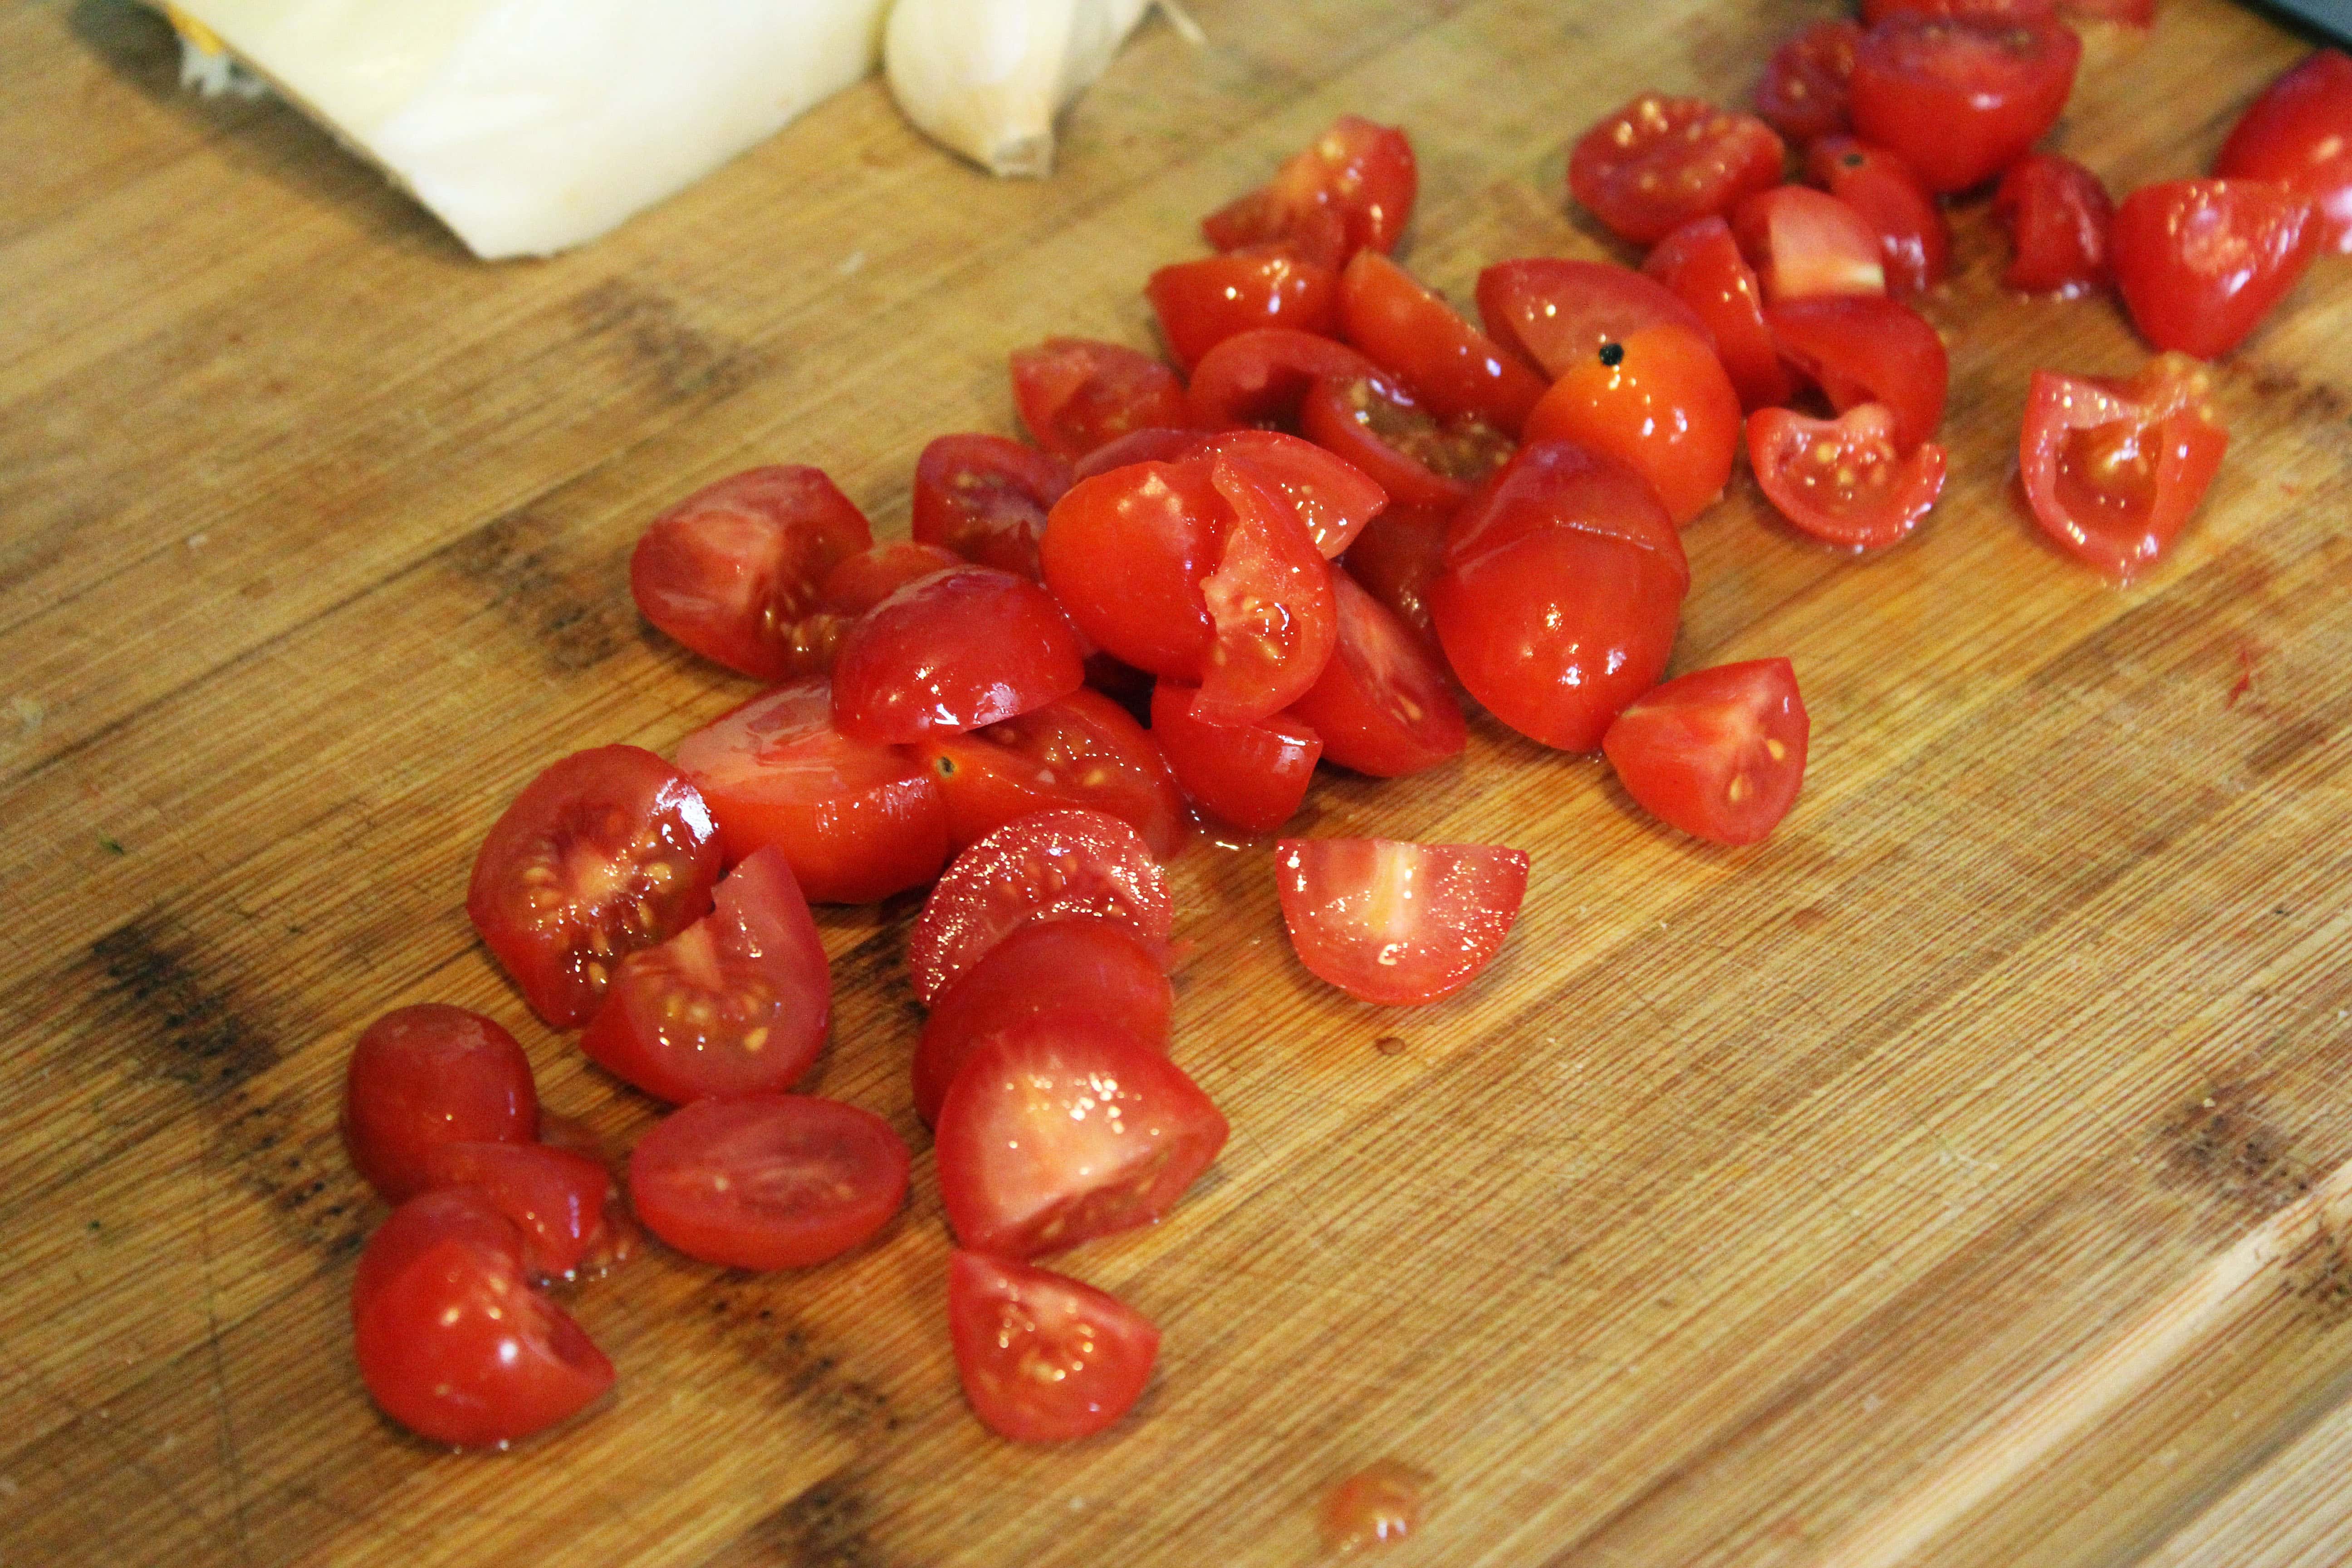 Halve or quarter tomatoes